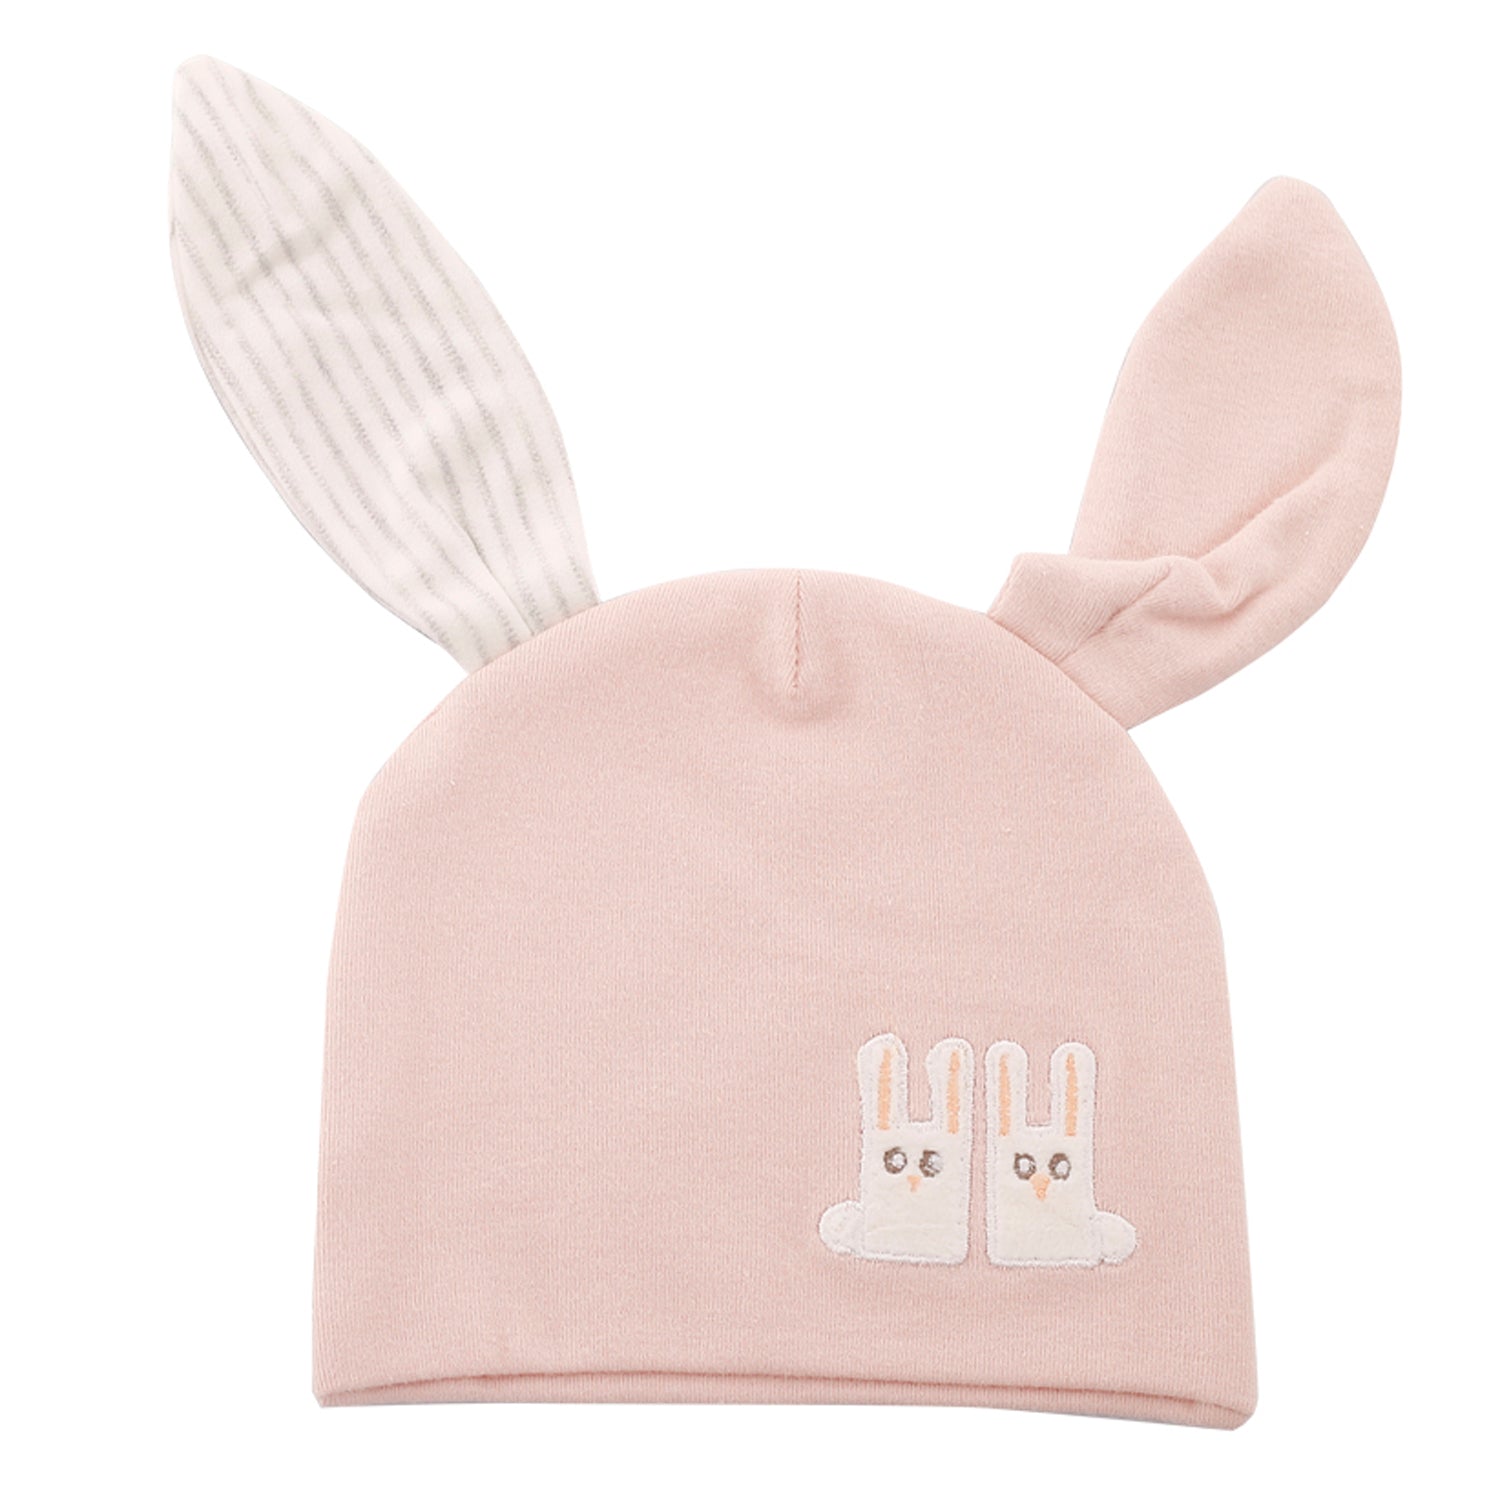 Big Bunny Ears Pink And Peach 2 Pk Cap